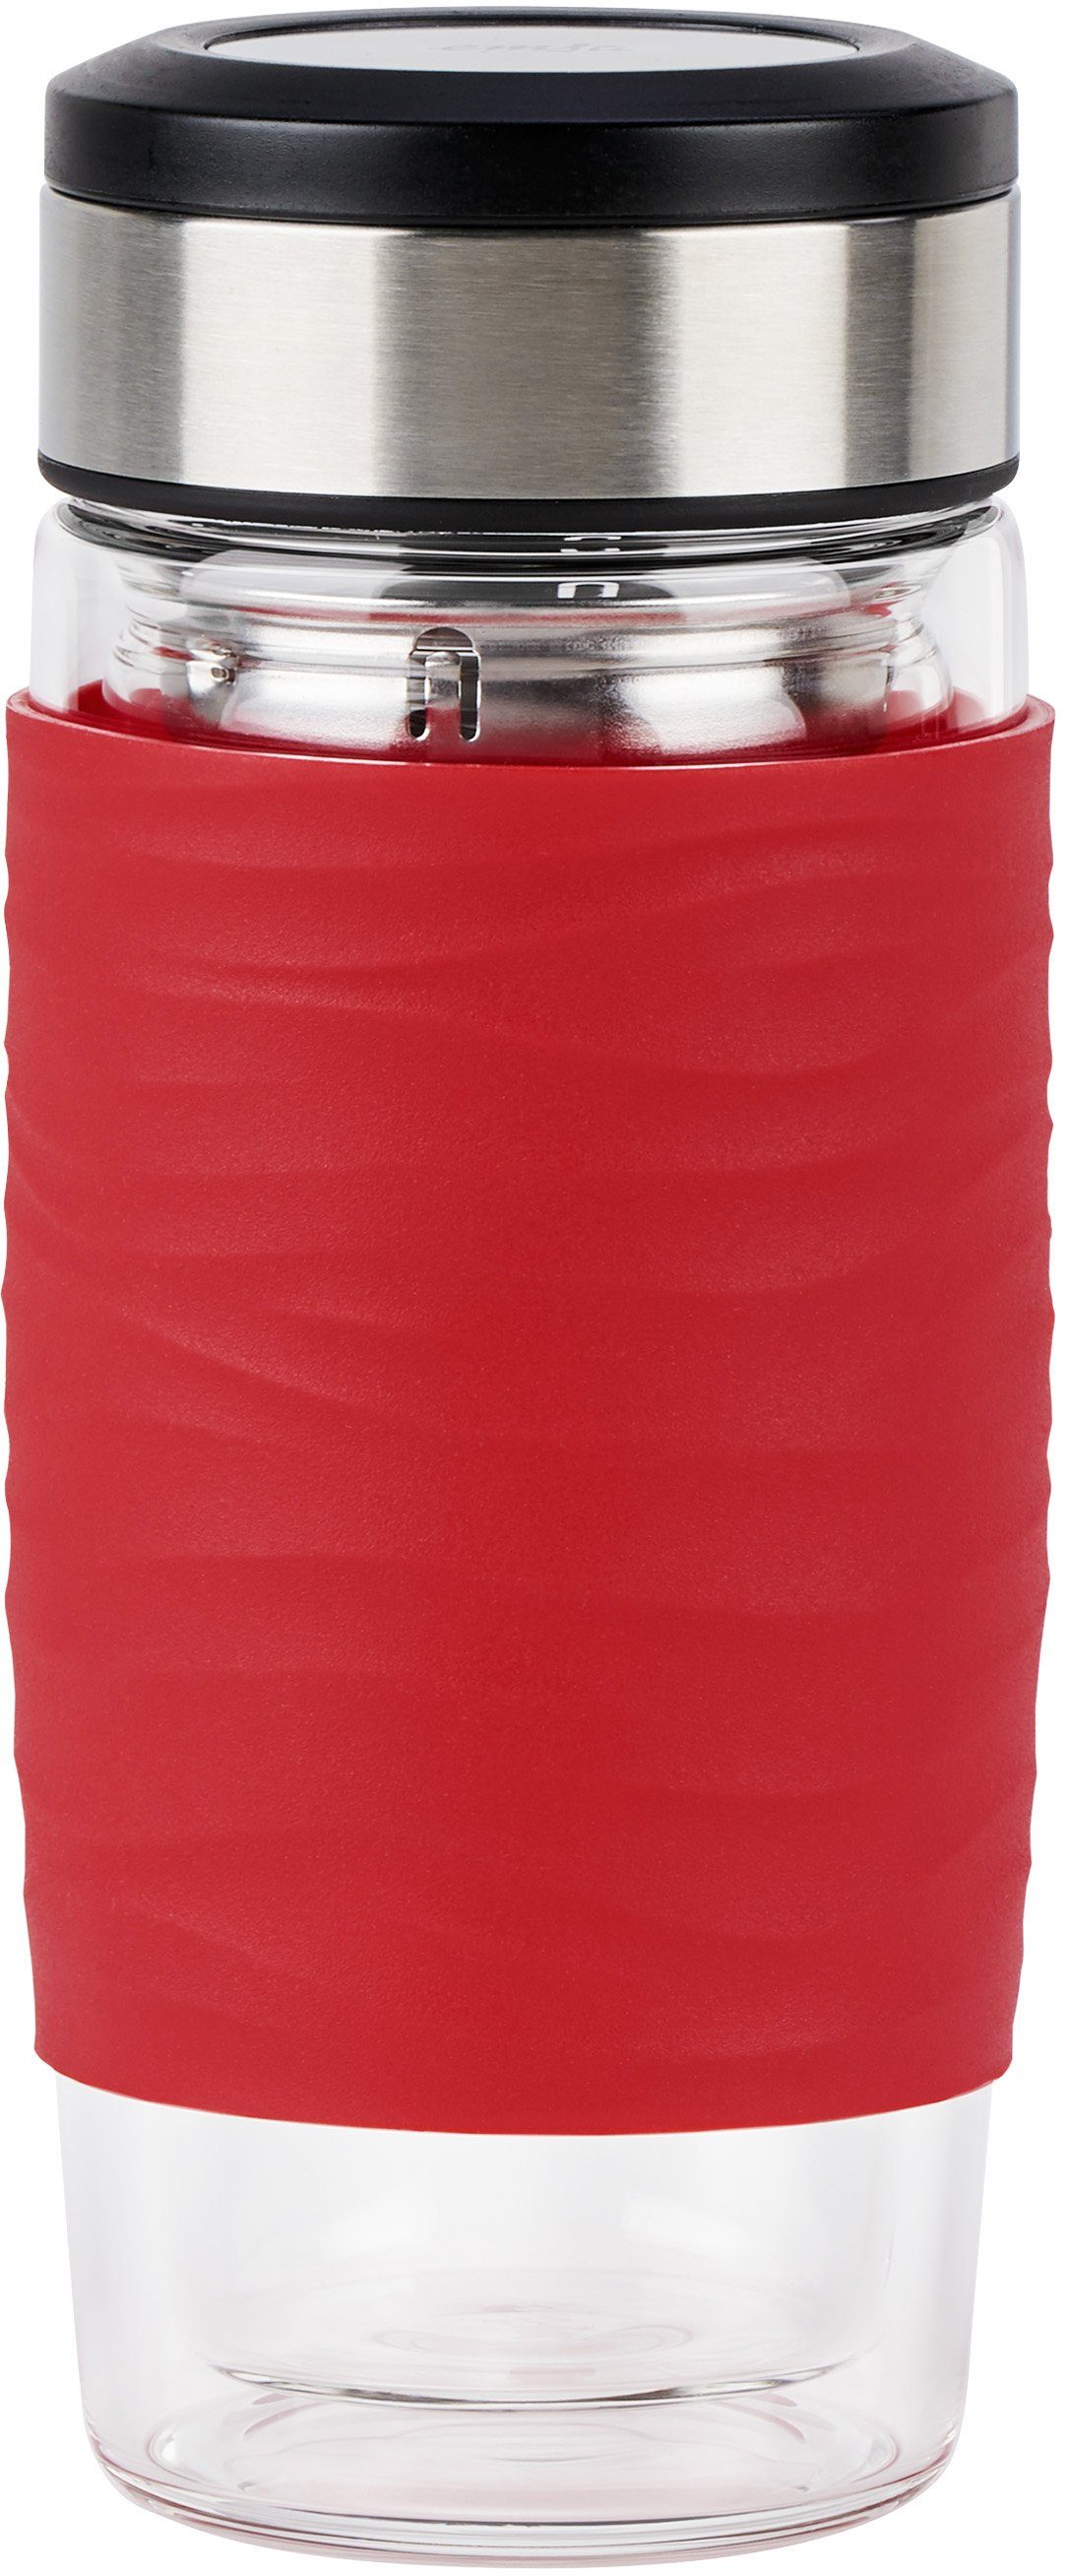 Emsa Thermobecher Tea Mug, Edelstahl, Glas, Silikon, Teebecher, 400 ml, 100% dicht, 3-teilig, mit herausnehmbarem Tee-Sieb rot/edelstahlfarben/transparent | Thermobecher